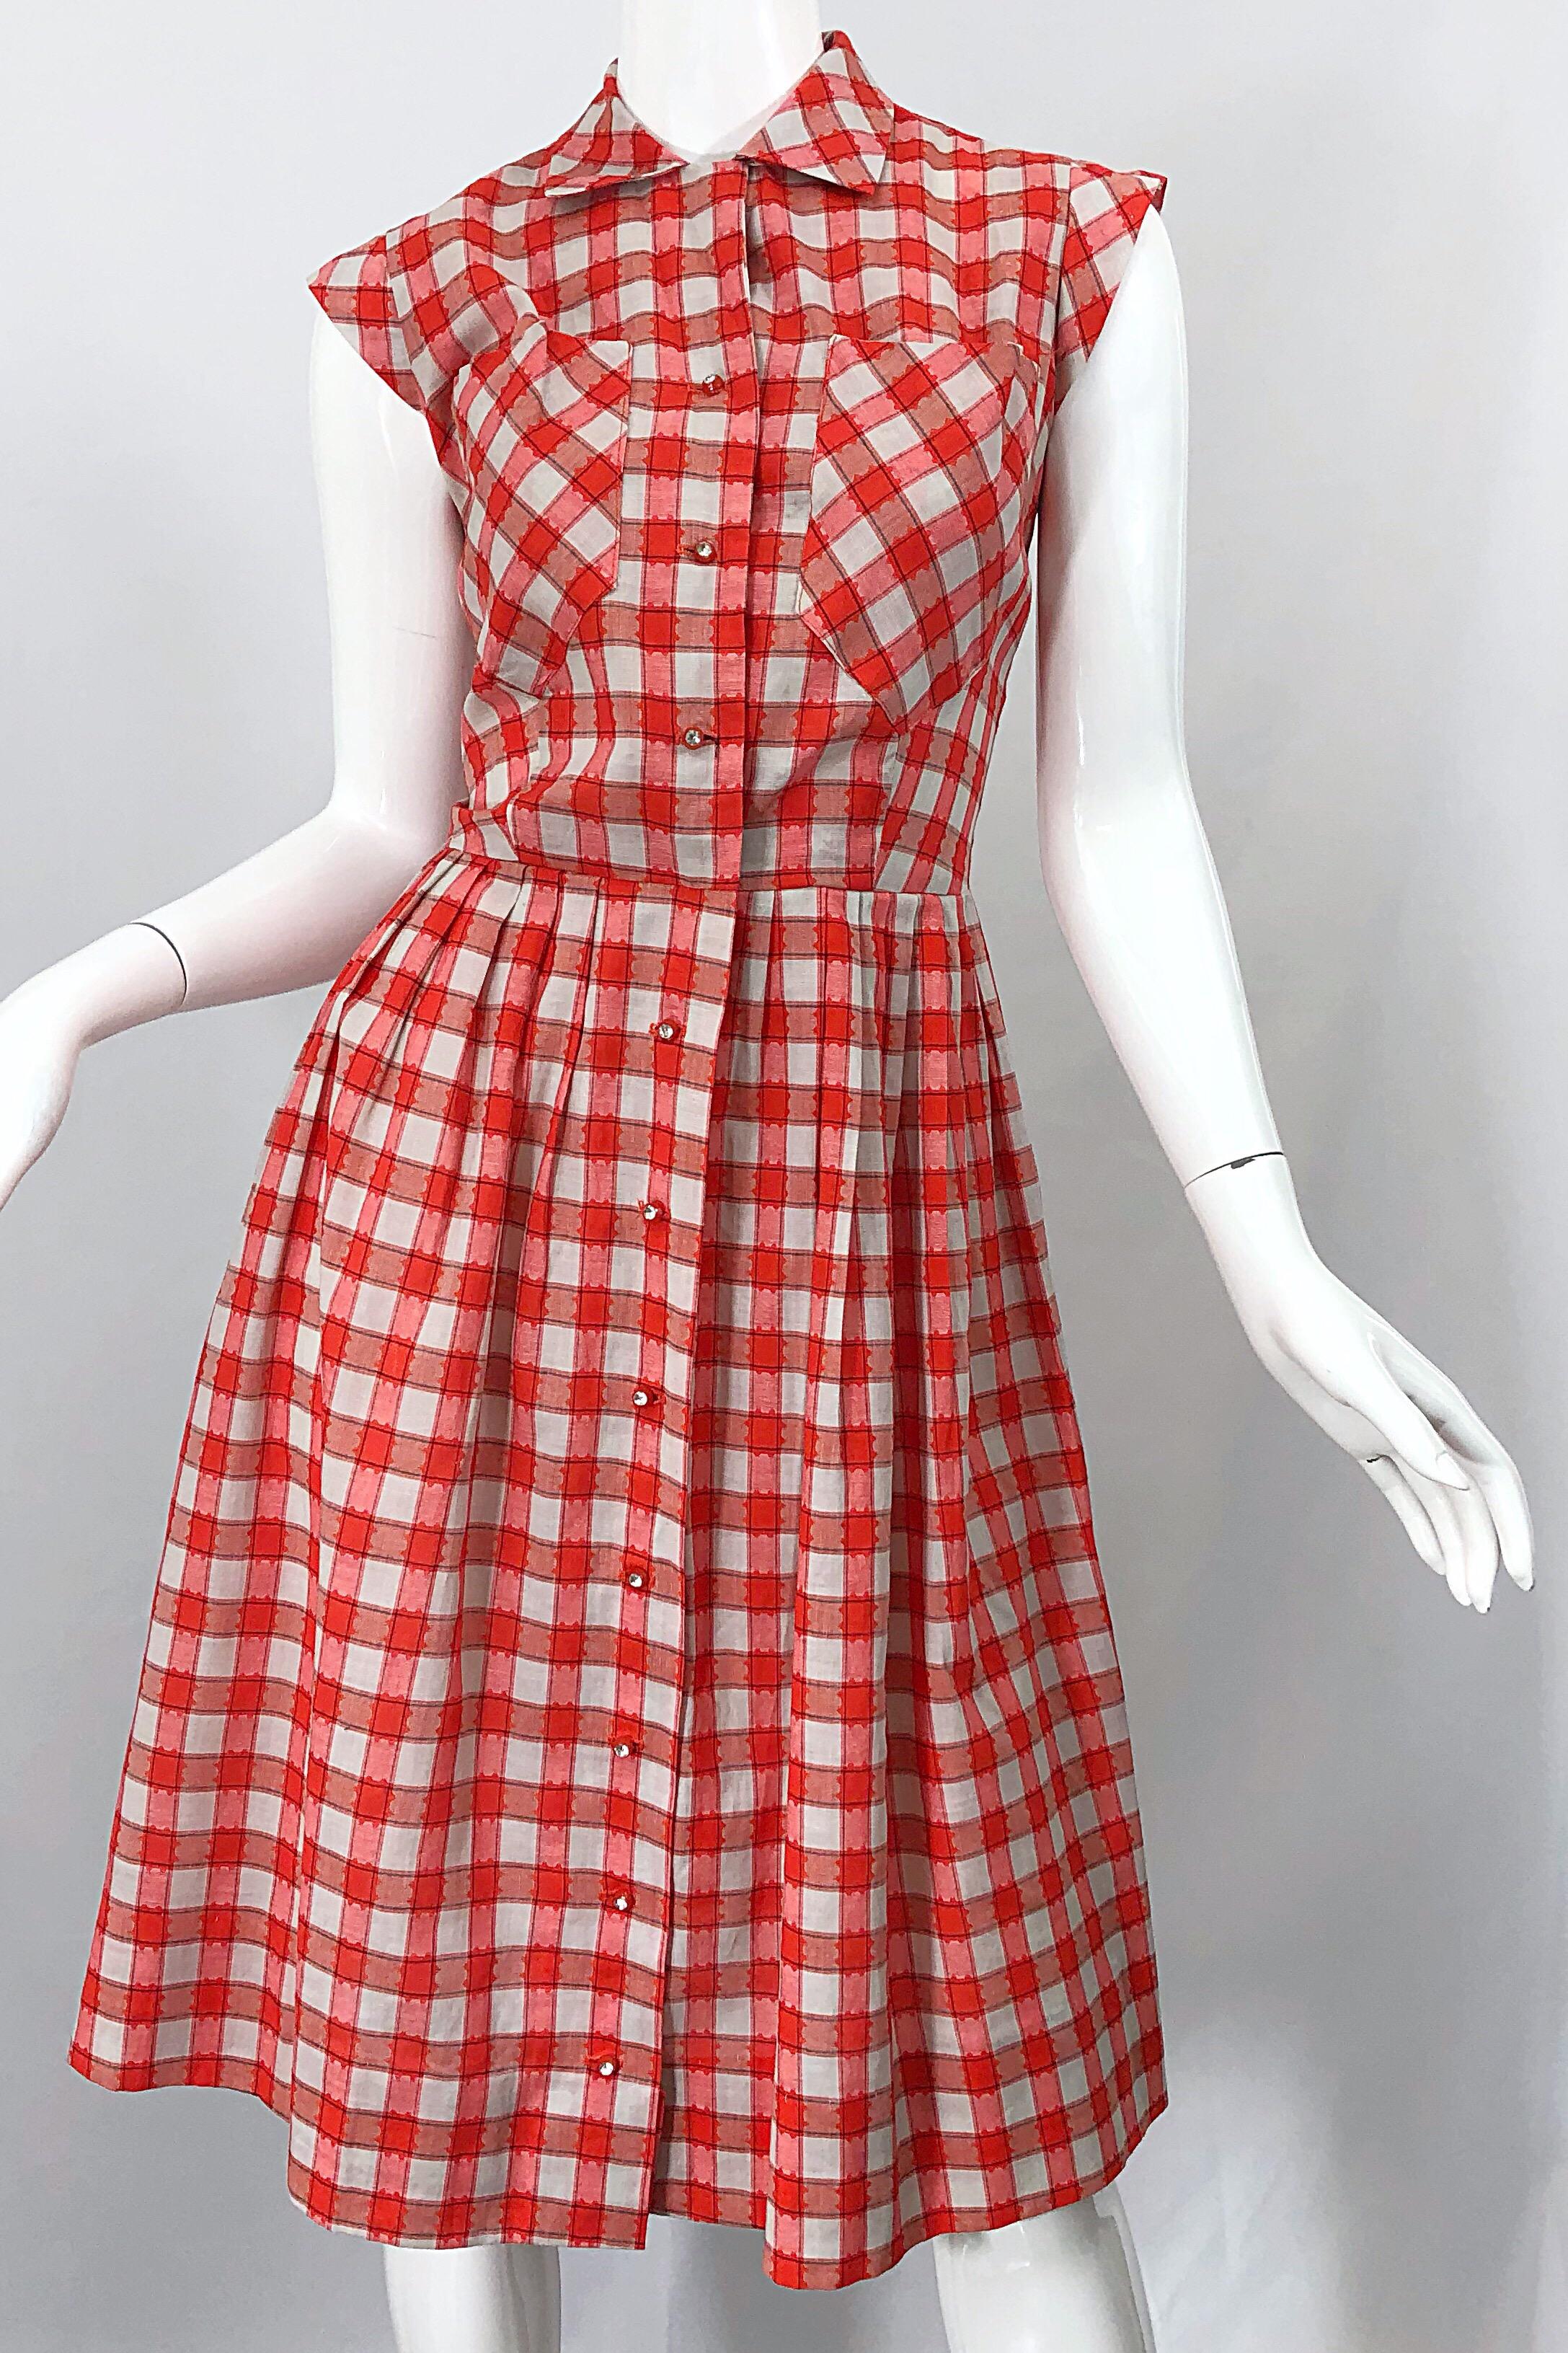 Rare 1950s Red + White Checkered Rhinestone Vintage 50s Cotton Dress 4